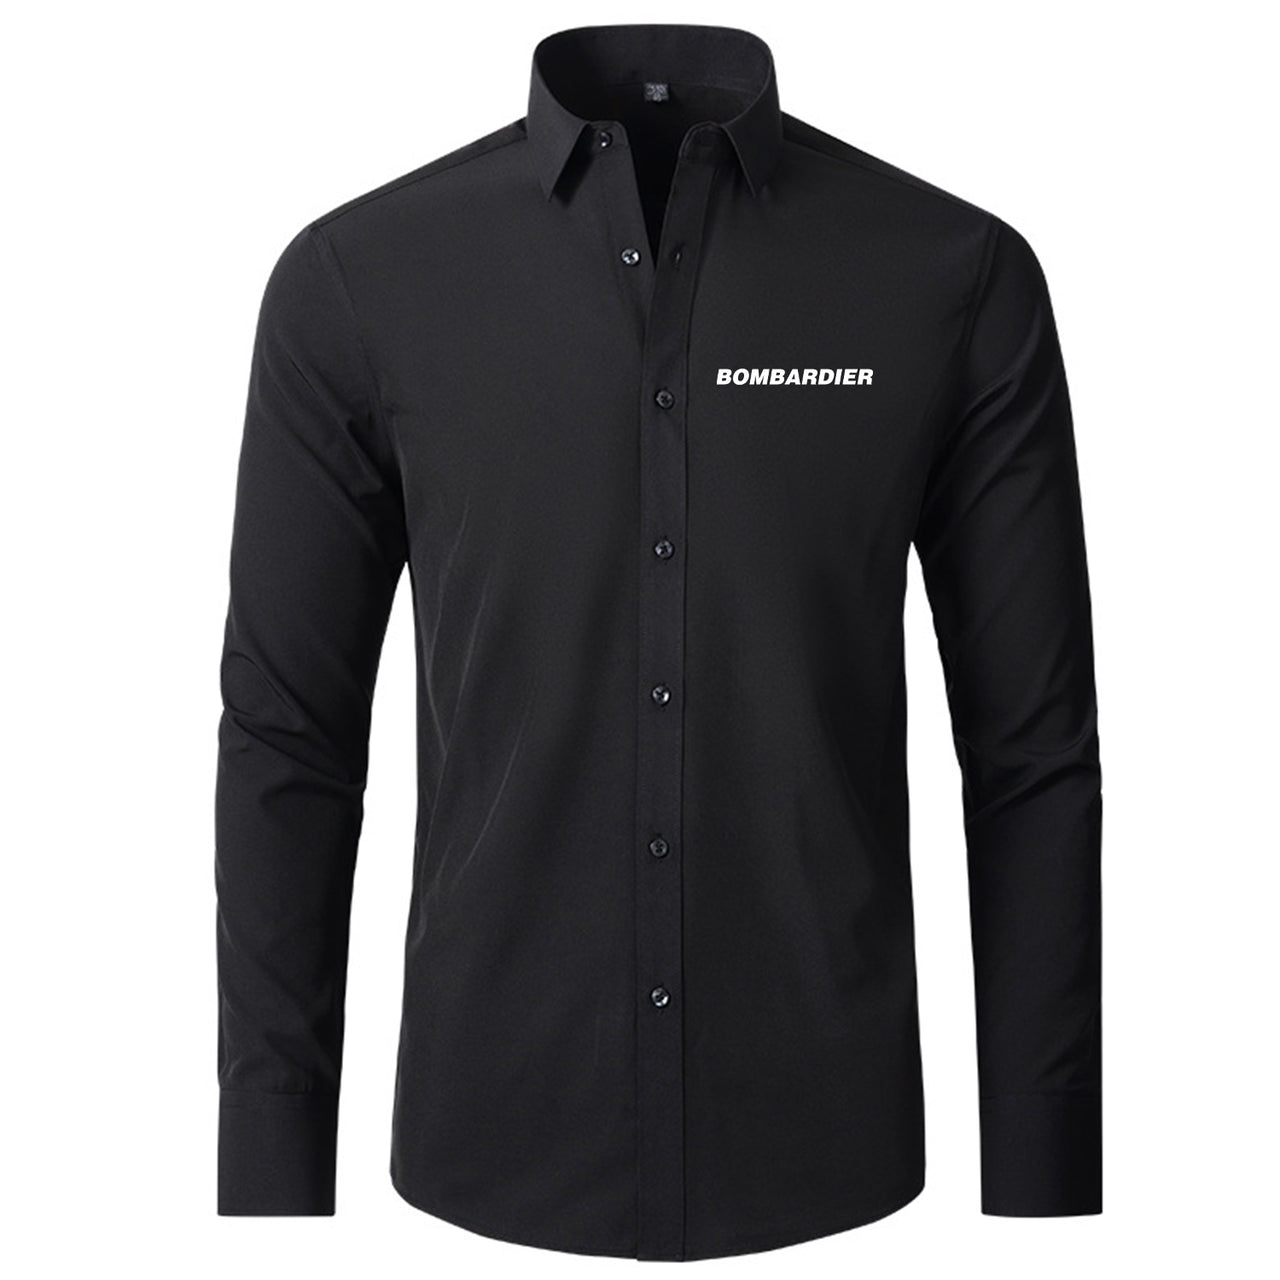 Bombardier & Text Designed Long Sleeve Shirts